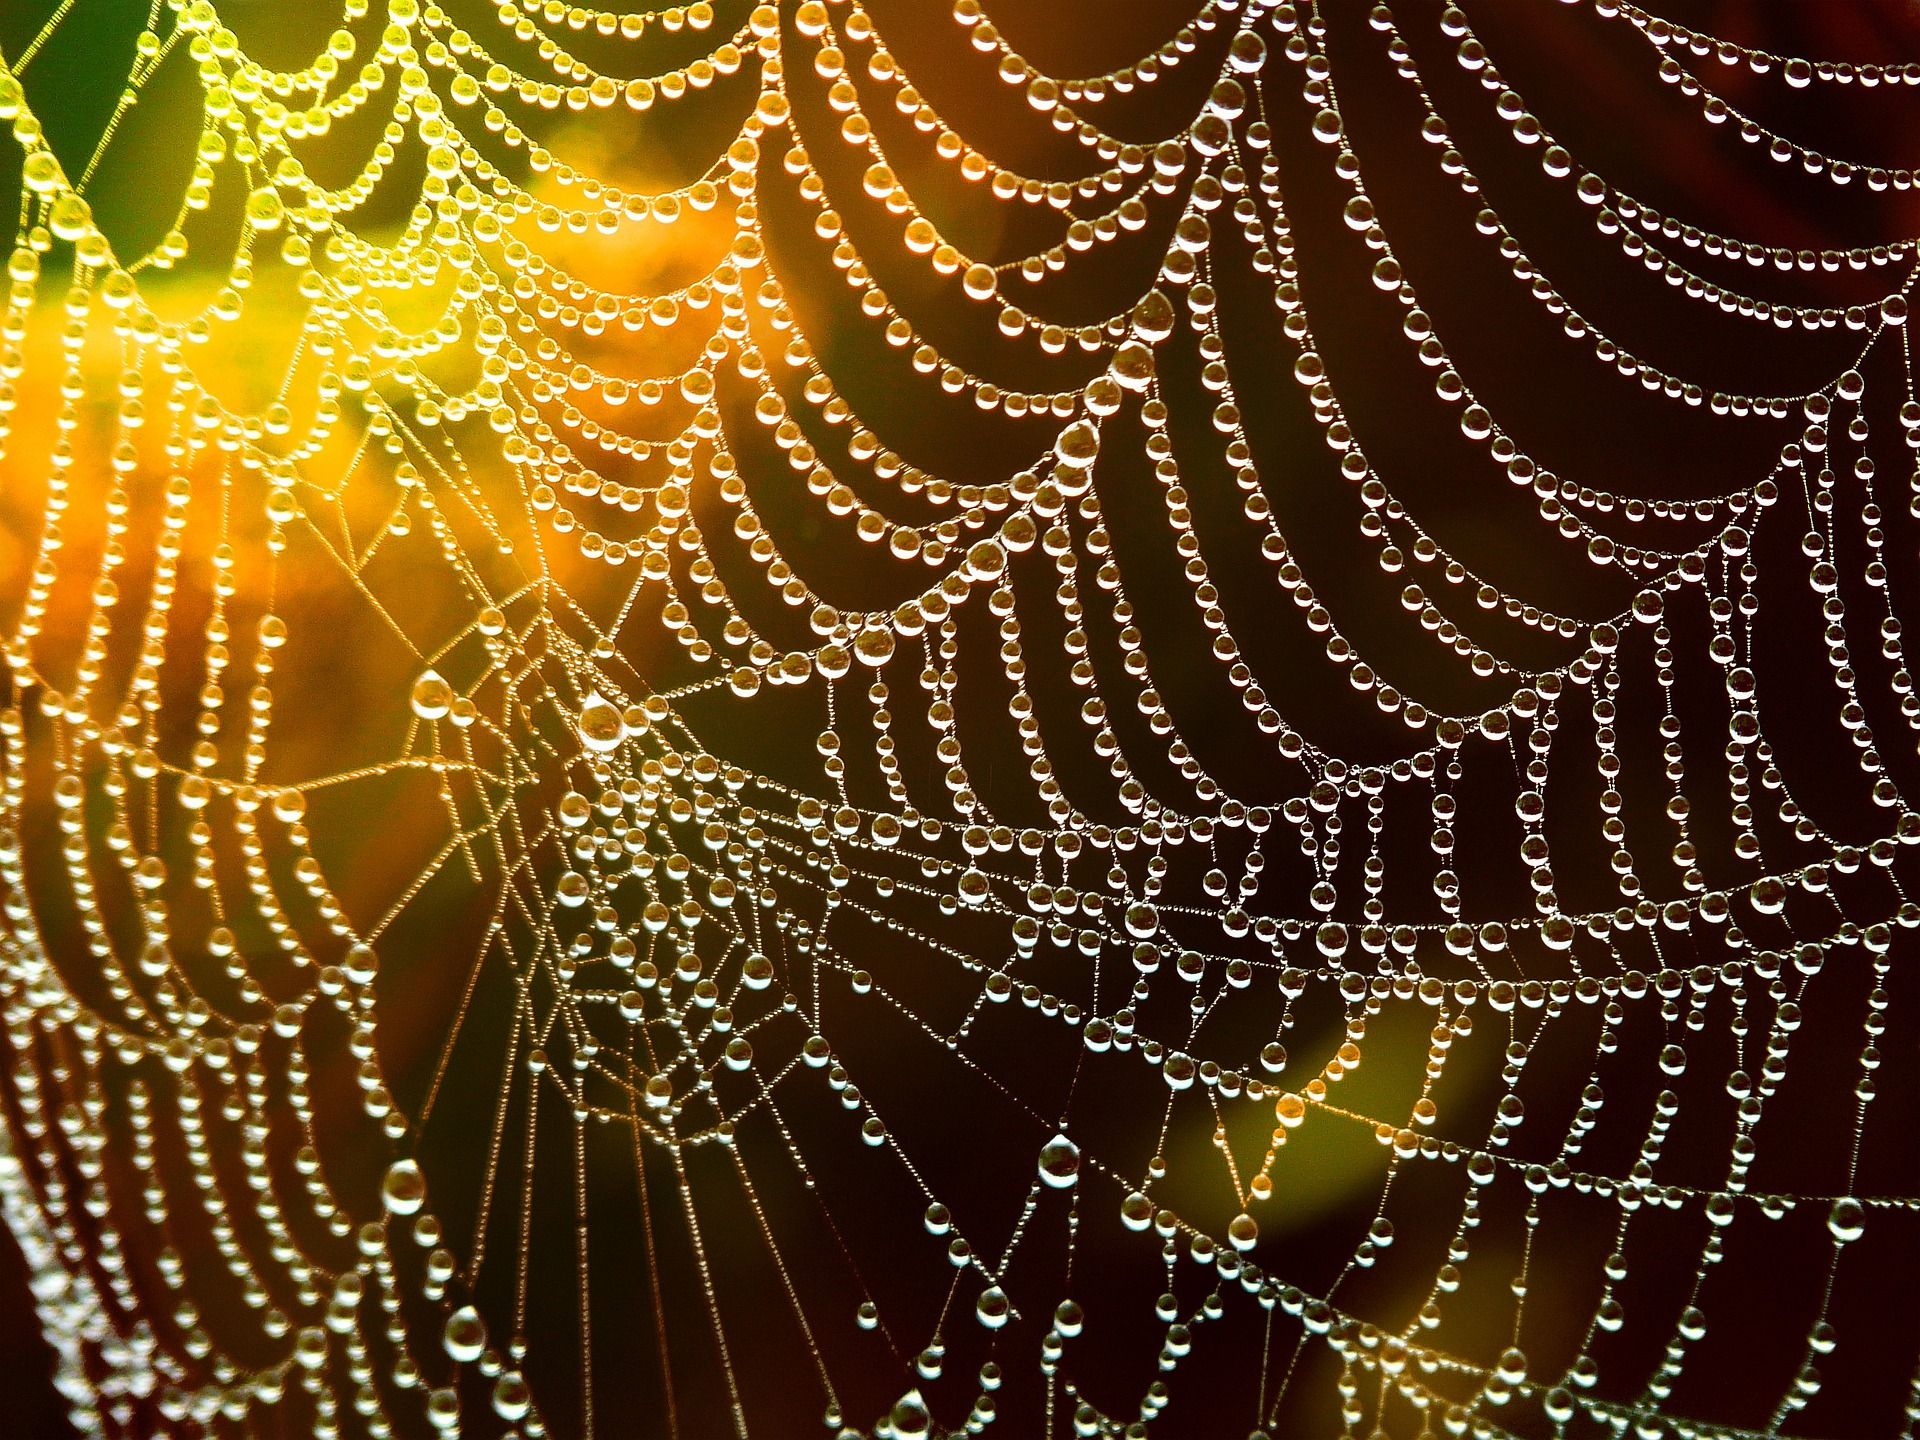 Dew covered cobweb